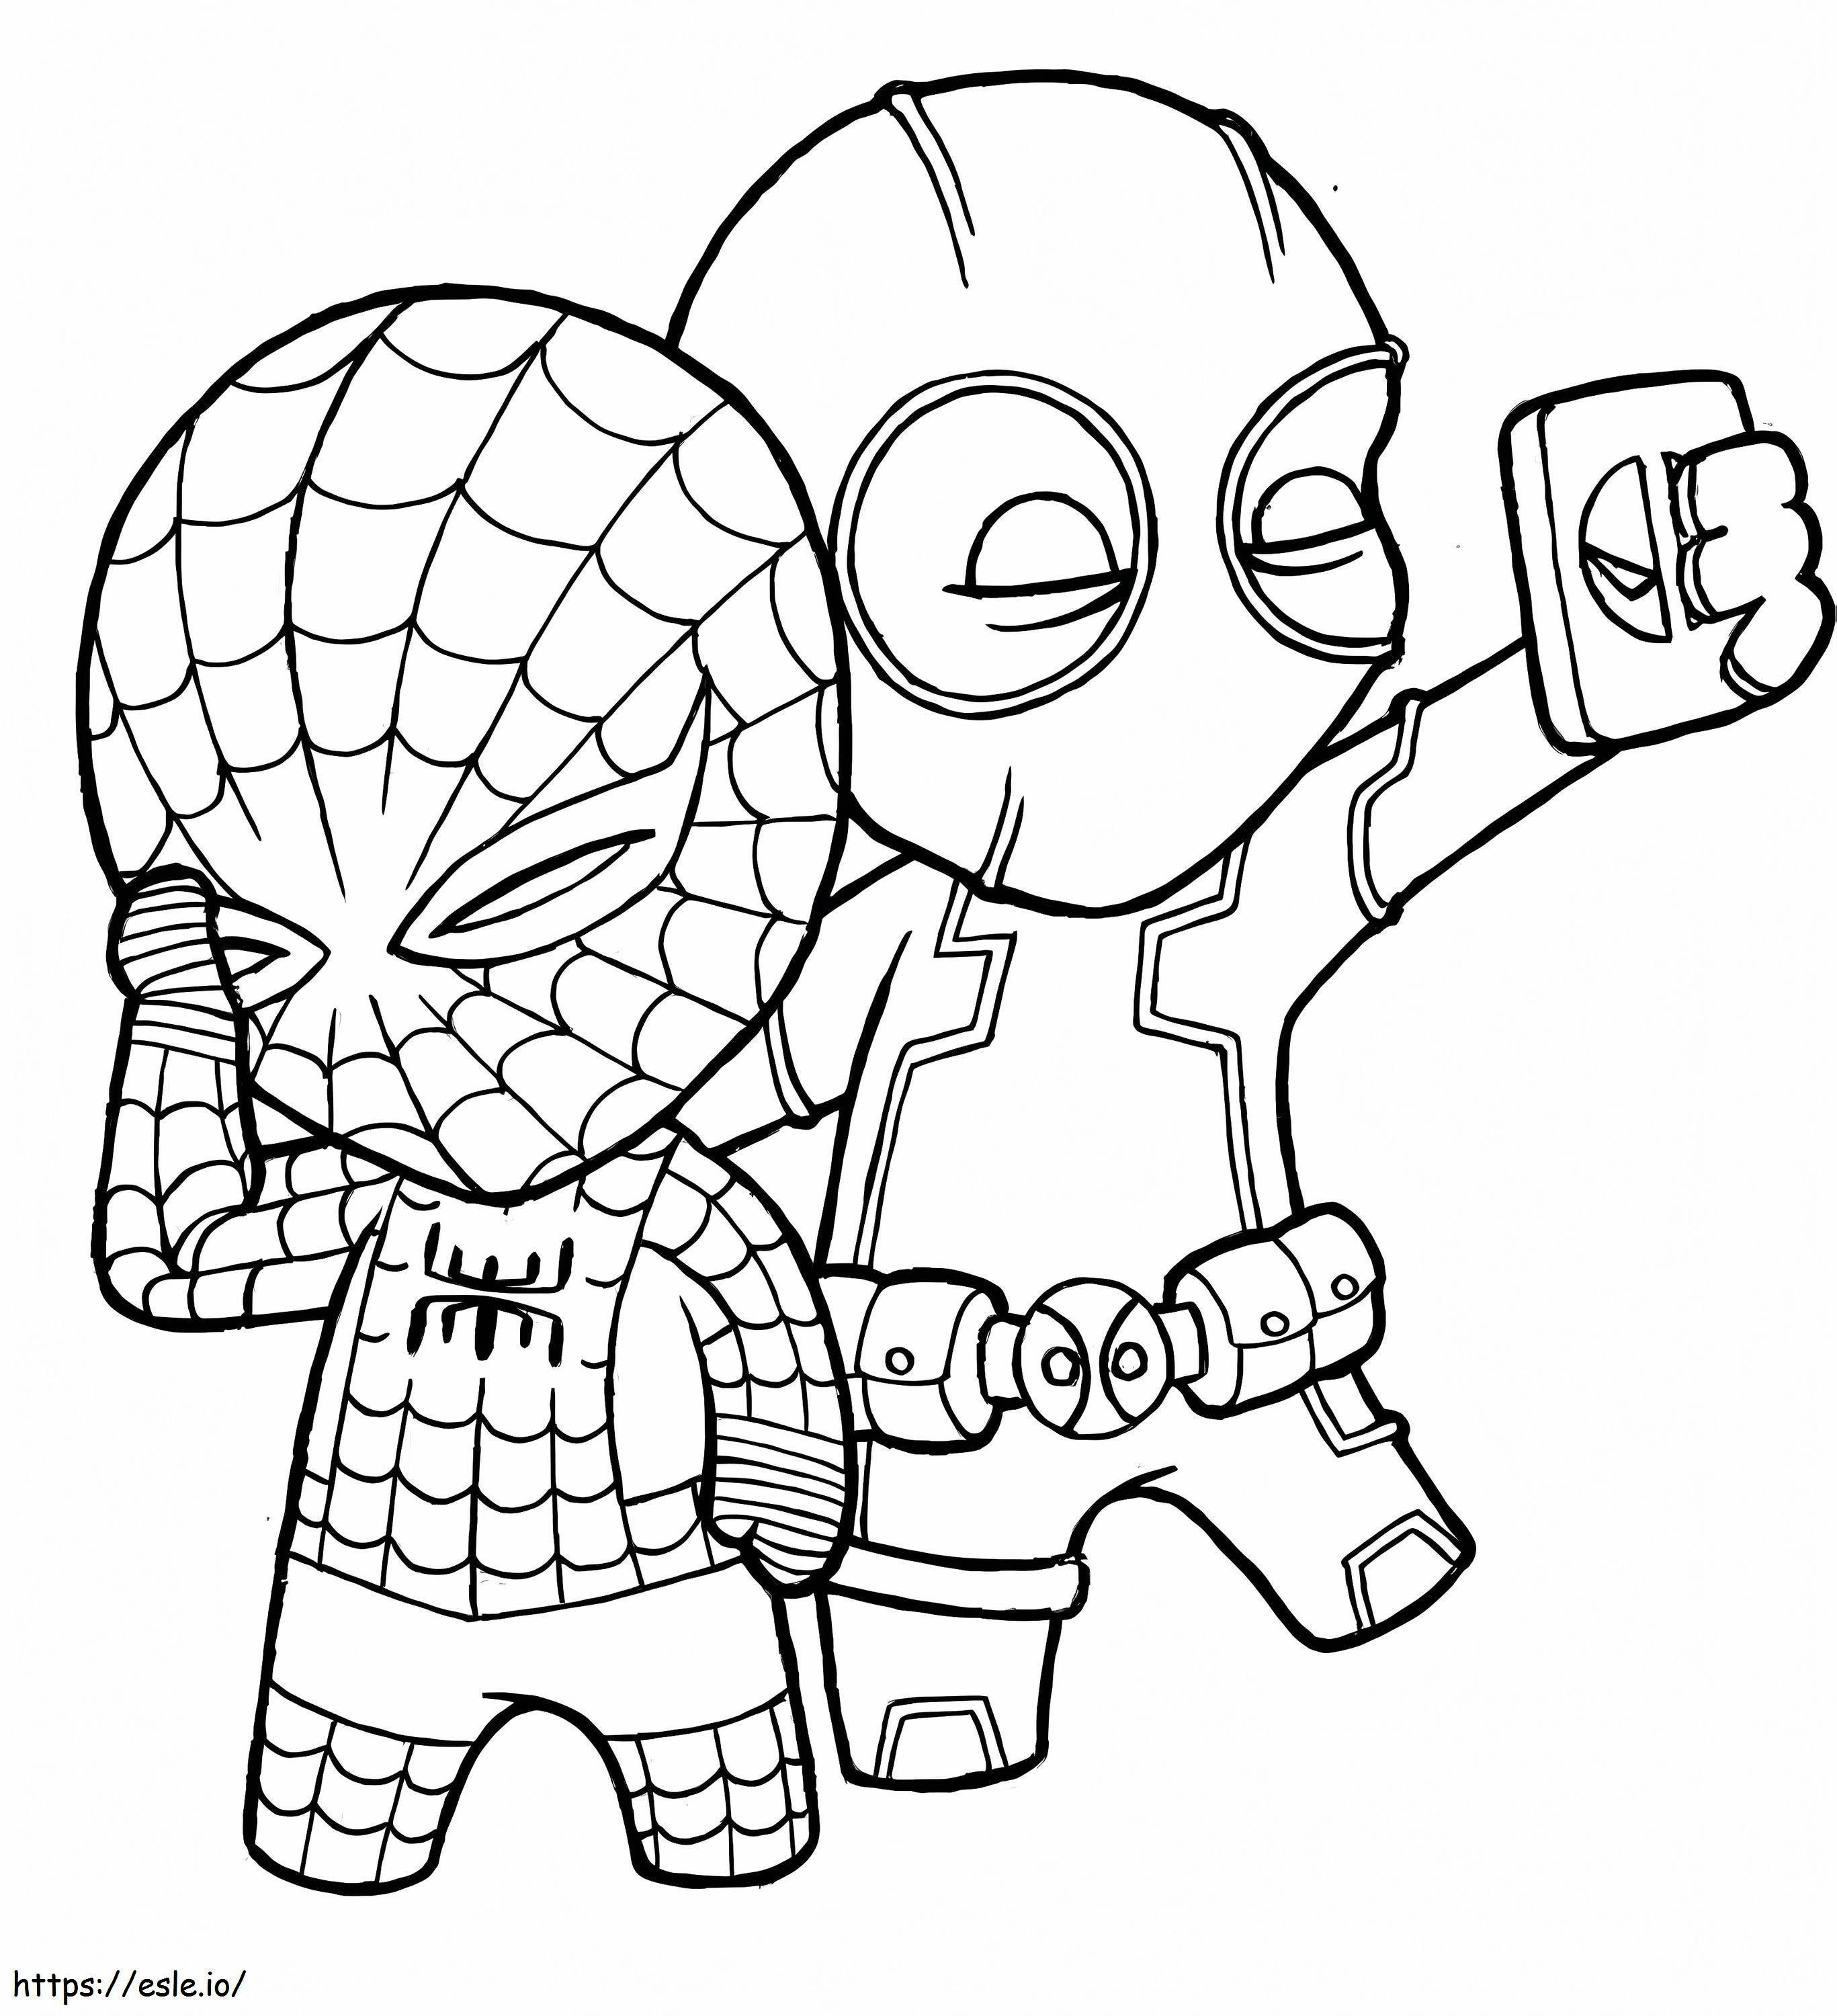 Chibi Deadpool Y Chibi Spider Man Se Toman Una Selfie de colorat